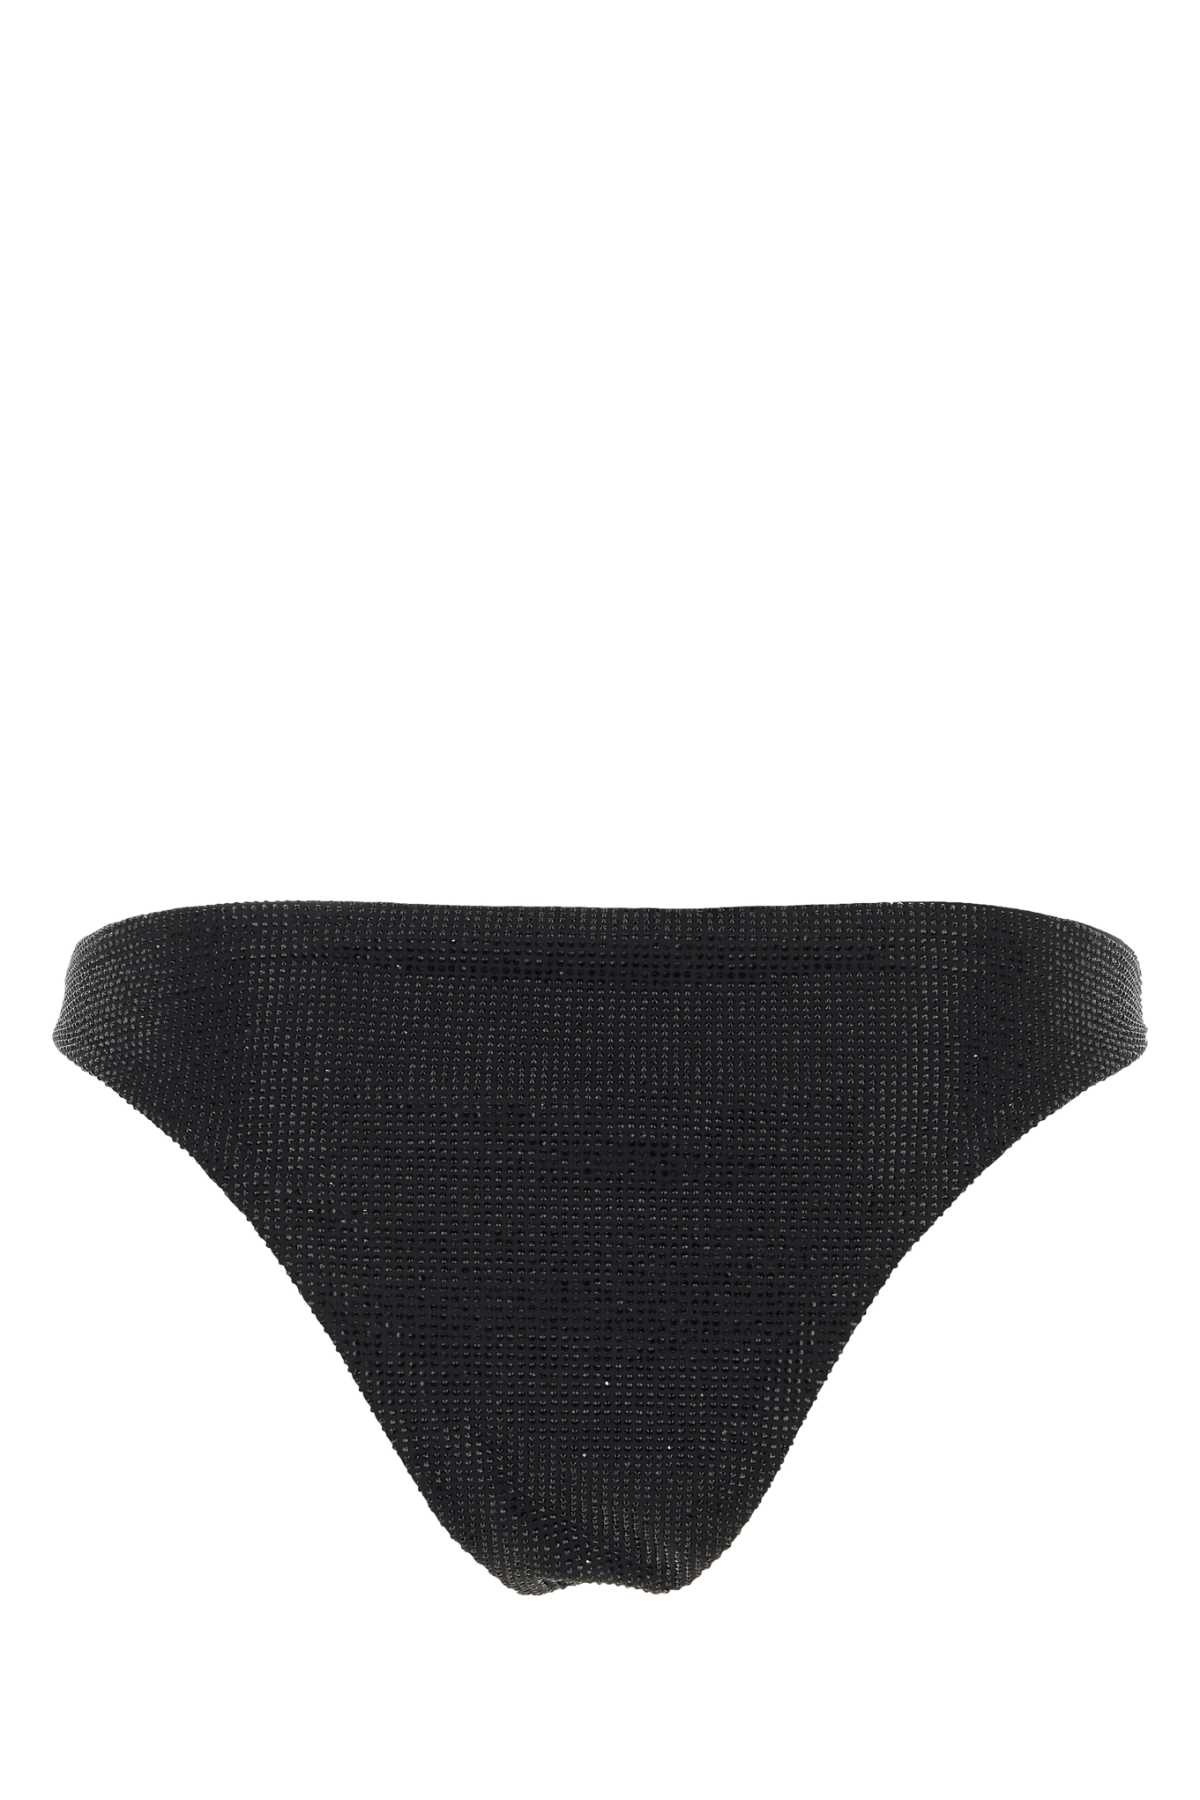 Prada Black Stretch Re-nylon Bikini Bottom In Nero